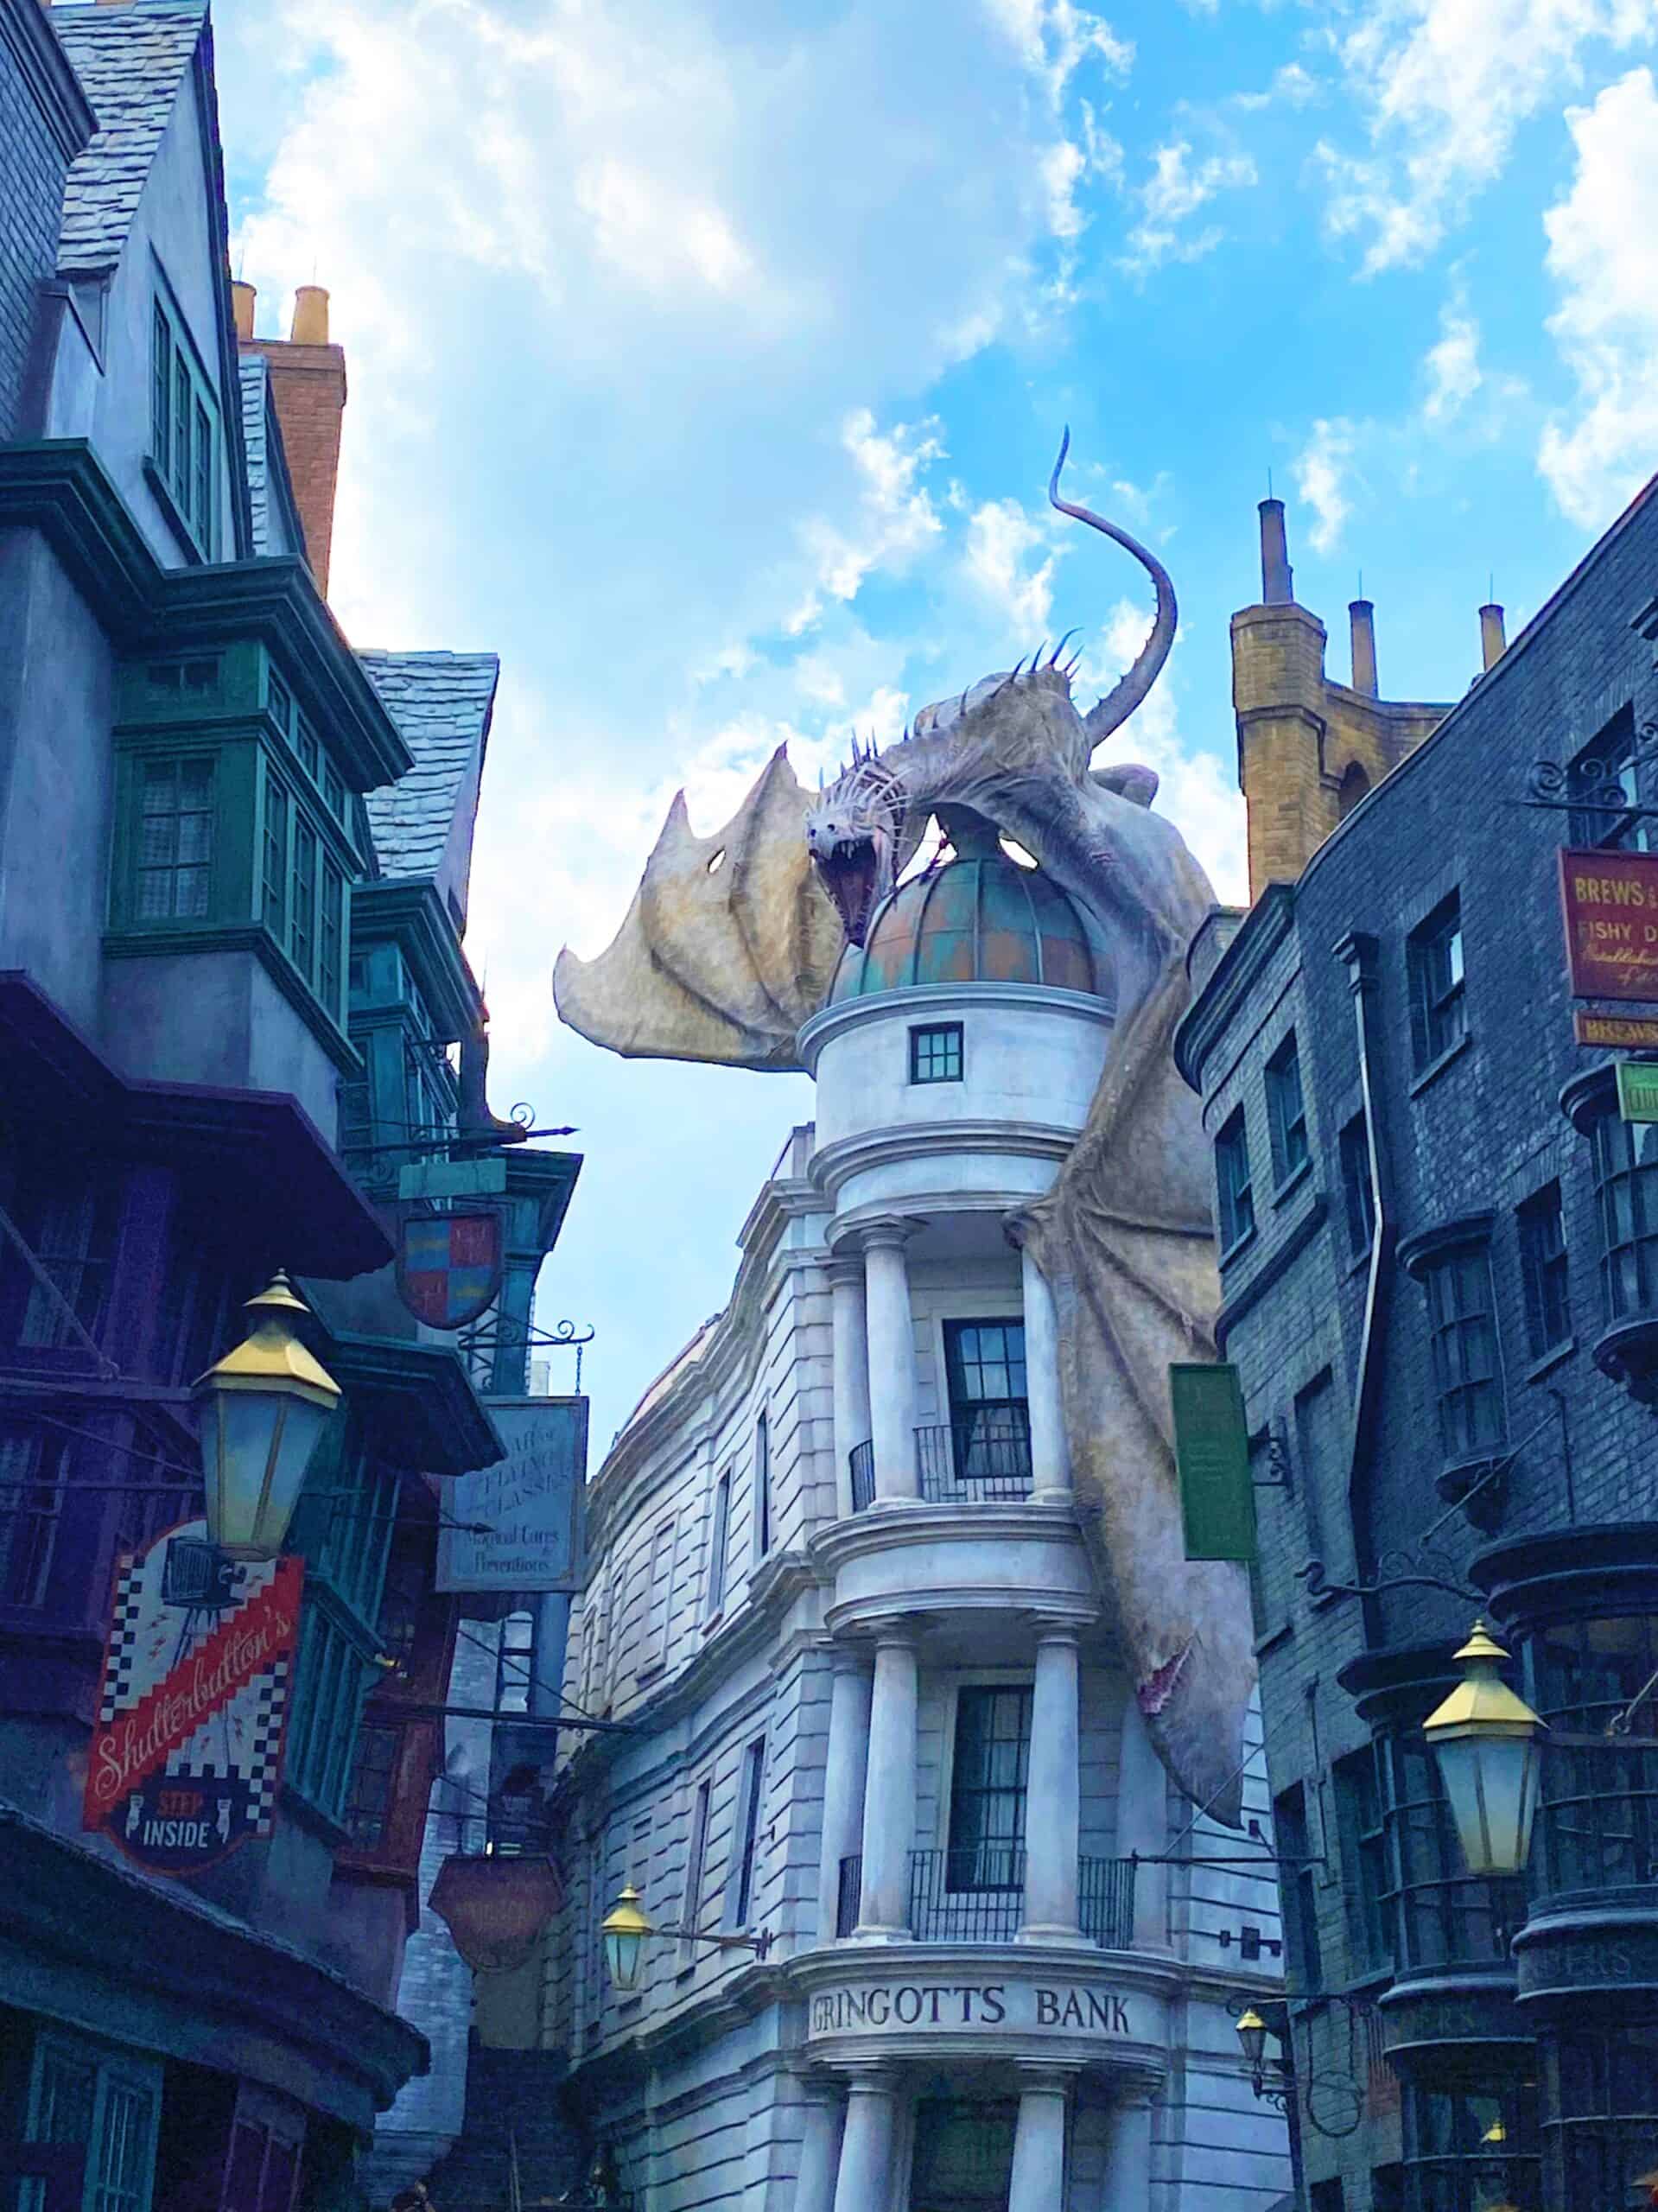  Universal Studios Wizarding World of Harry Potter Park